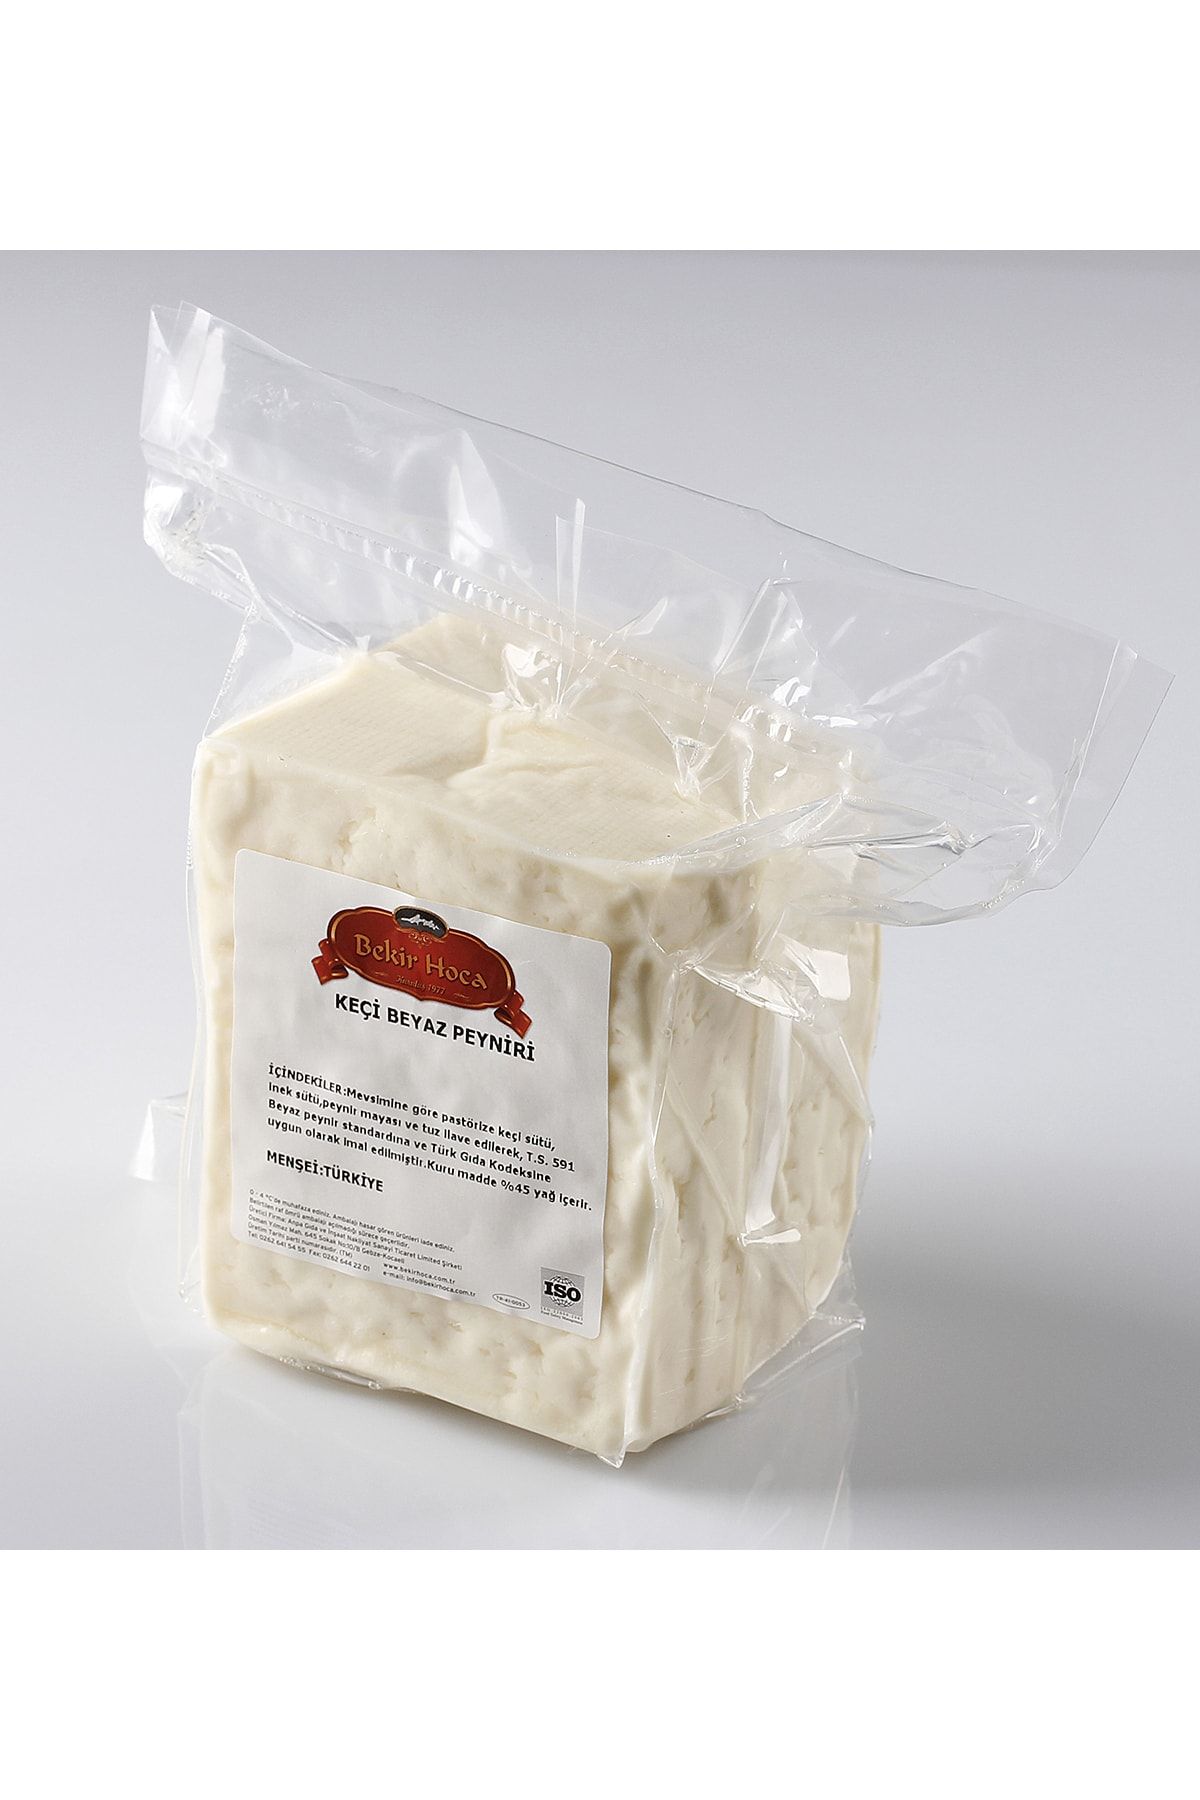 Bekir Hoca Beyaz Peynir Keçi 300-350 gr